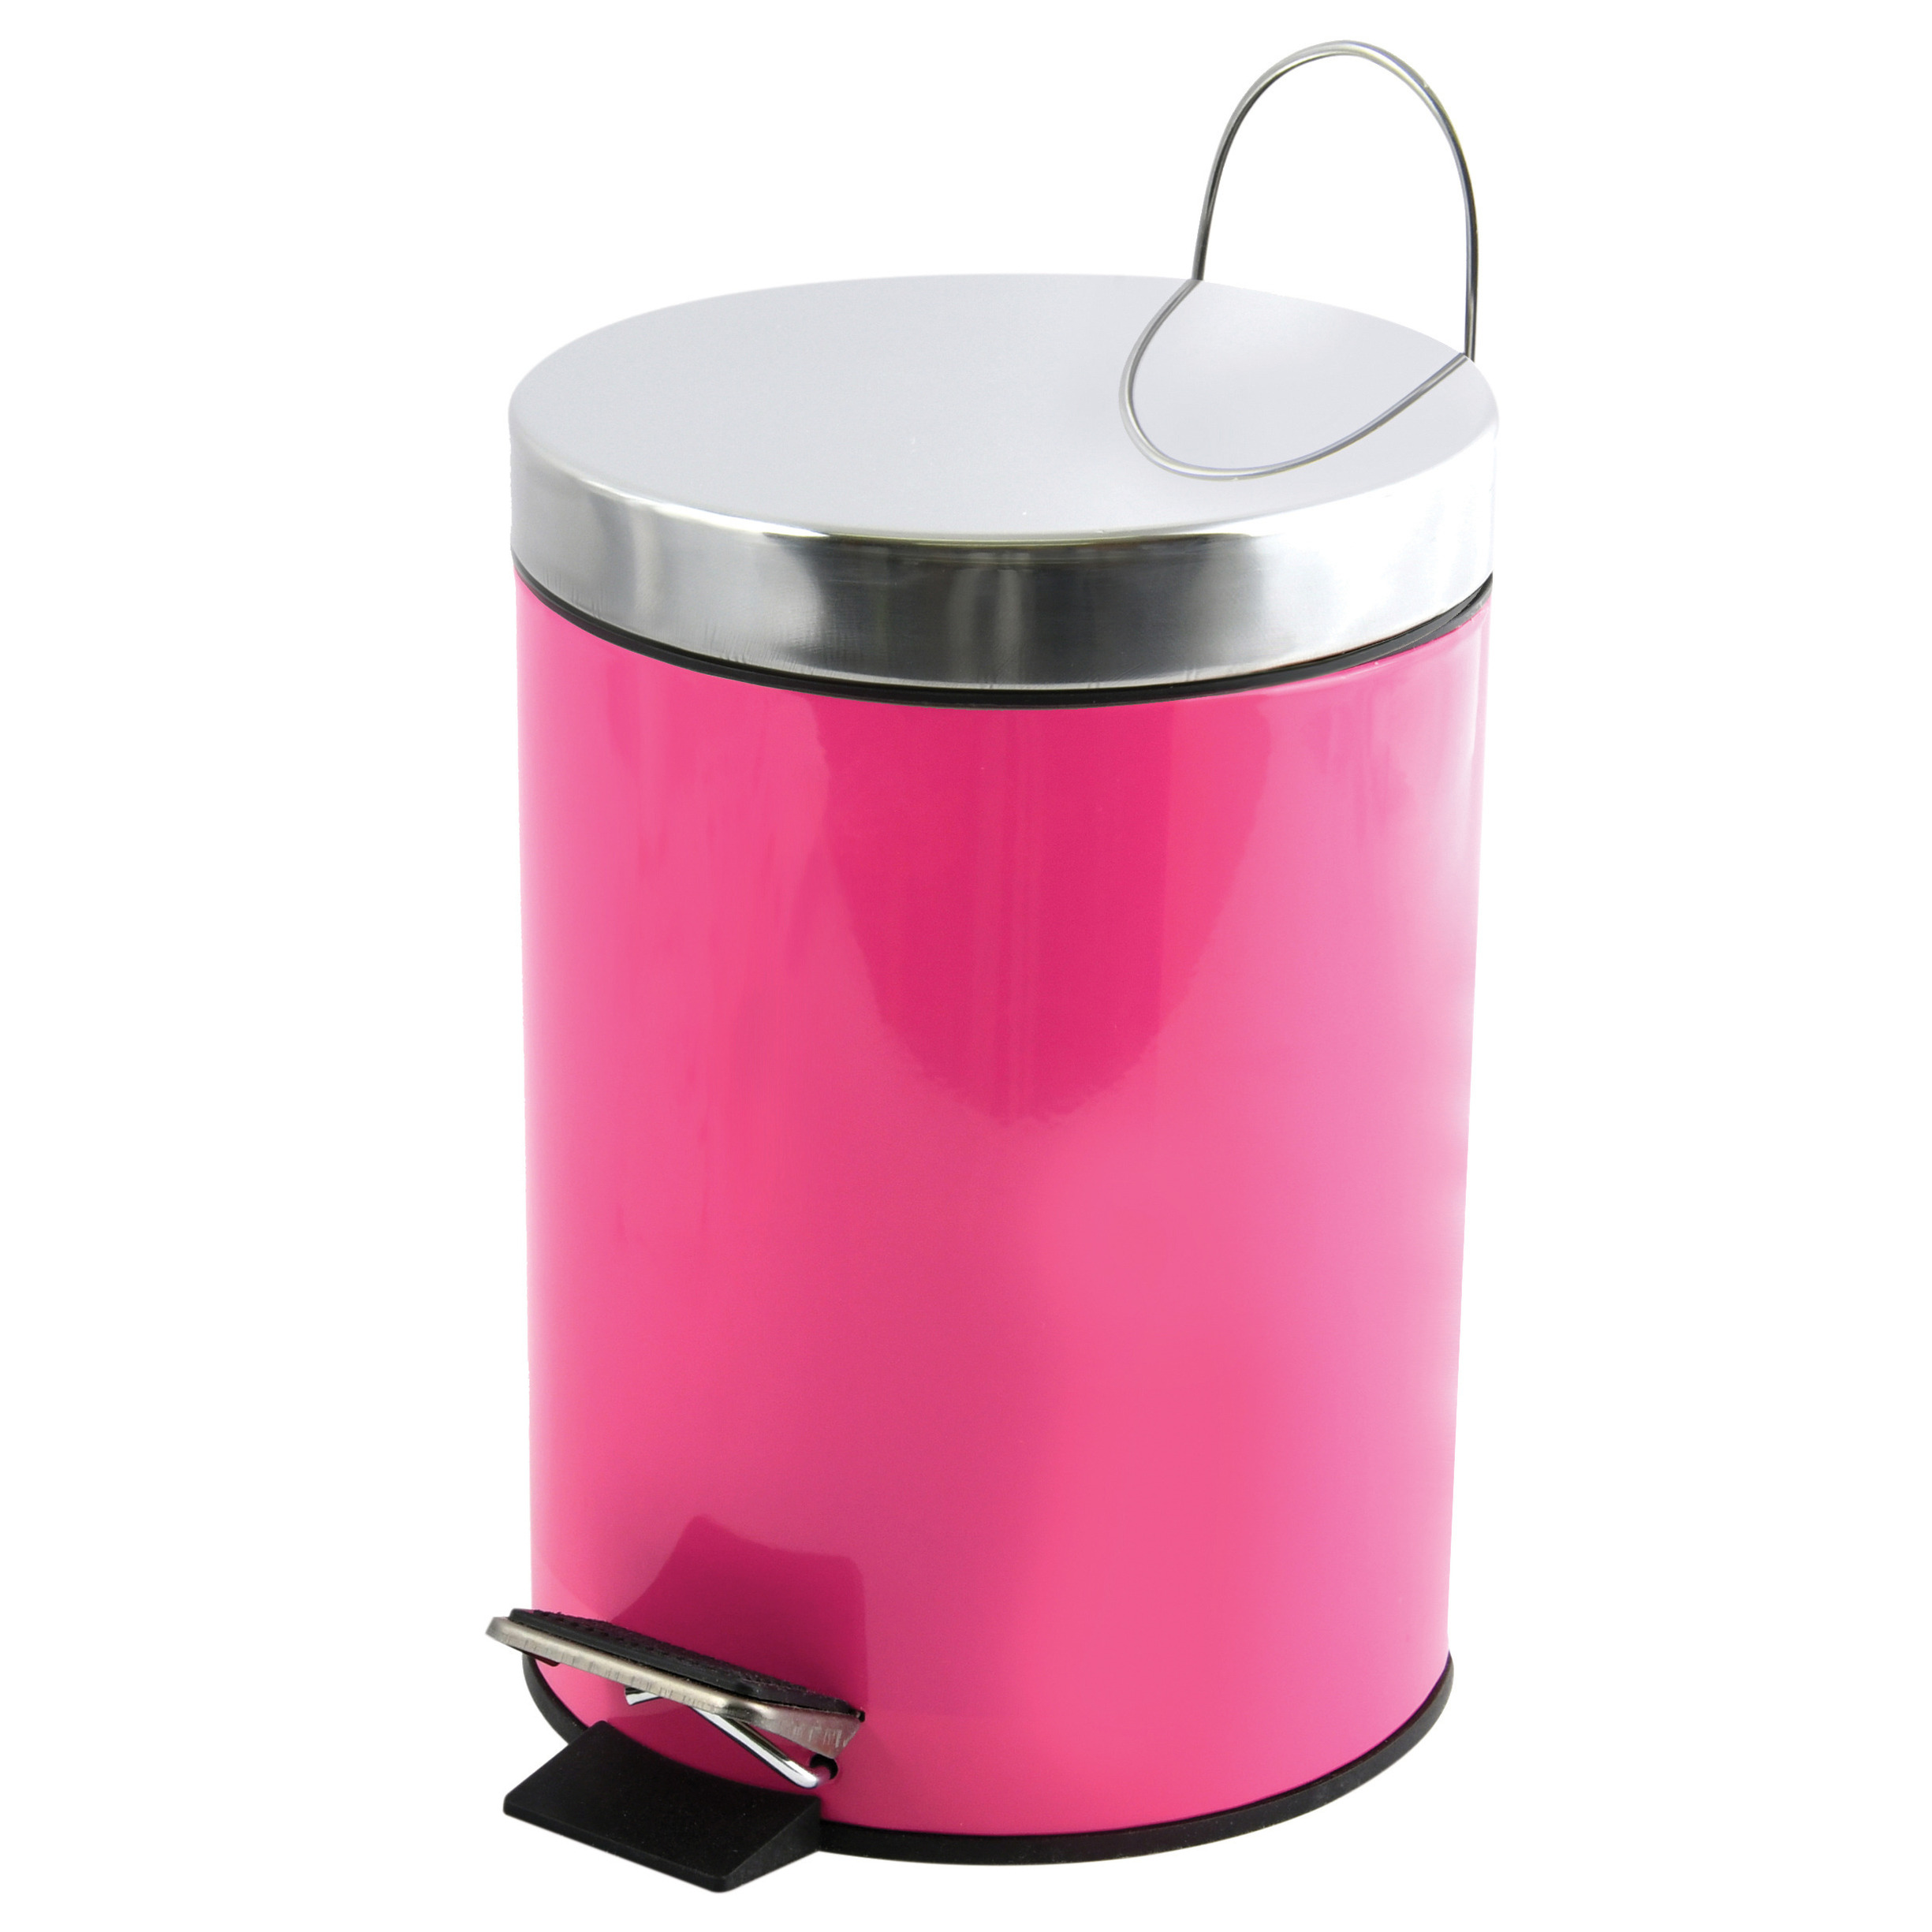 Prullenbak-pedaalemmer metaal fuchsia roze 3 liter 17 x 25 cm Badkamer-toilet